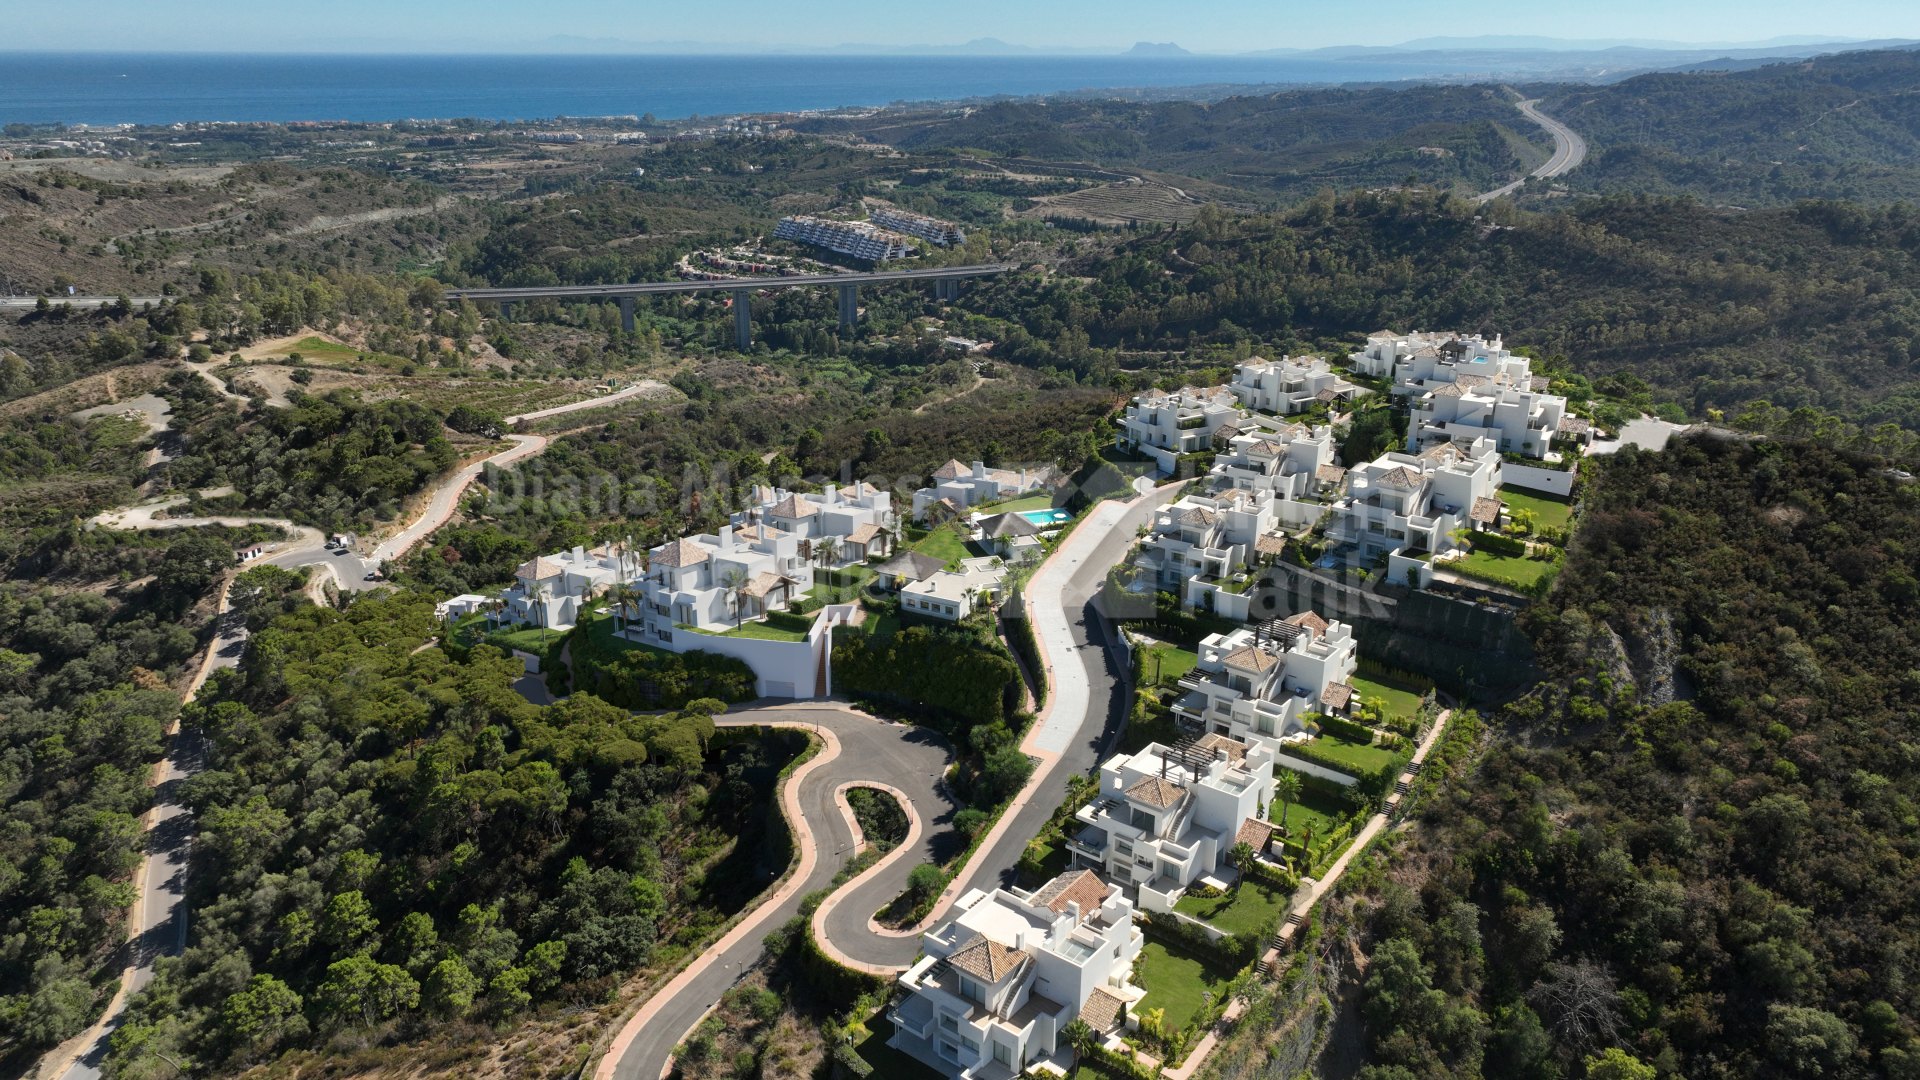 Marbella Club Hills, a new residential development next to Marbella Club Golf Resort